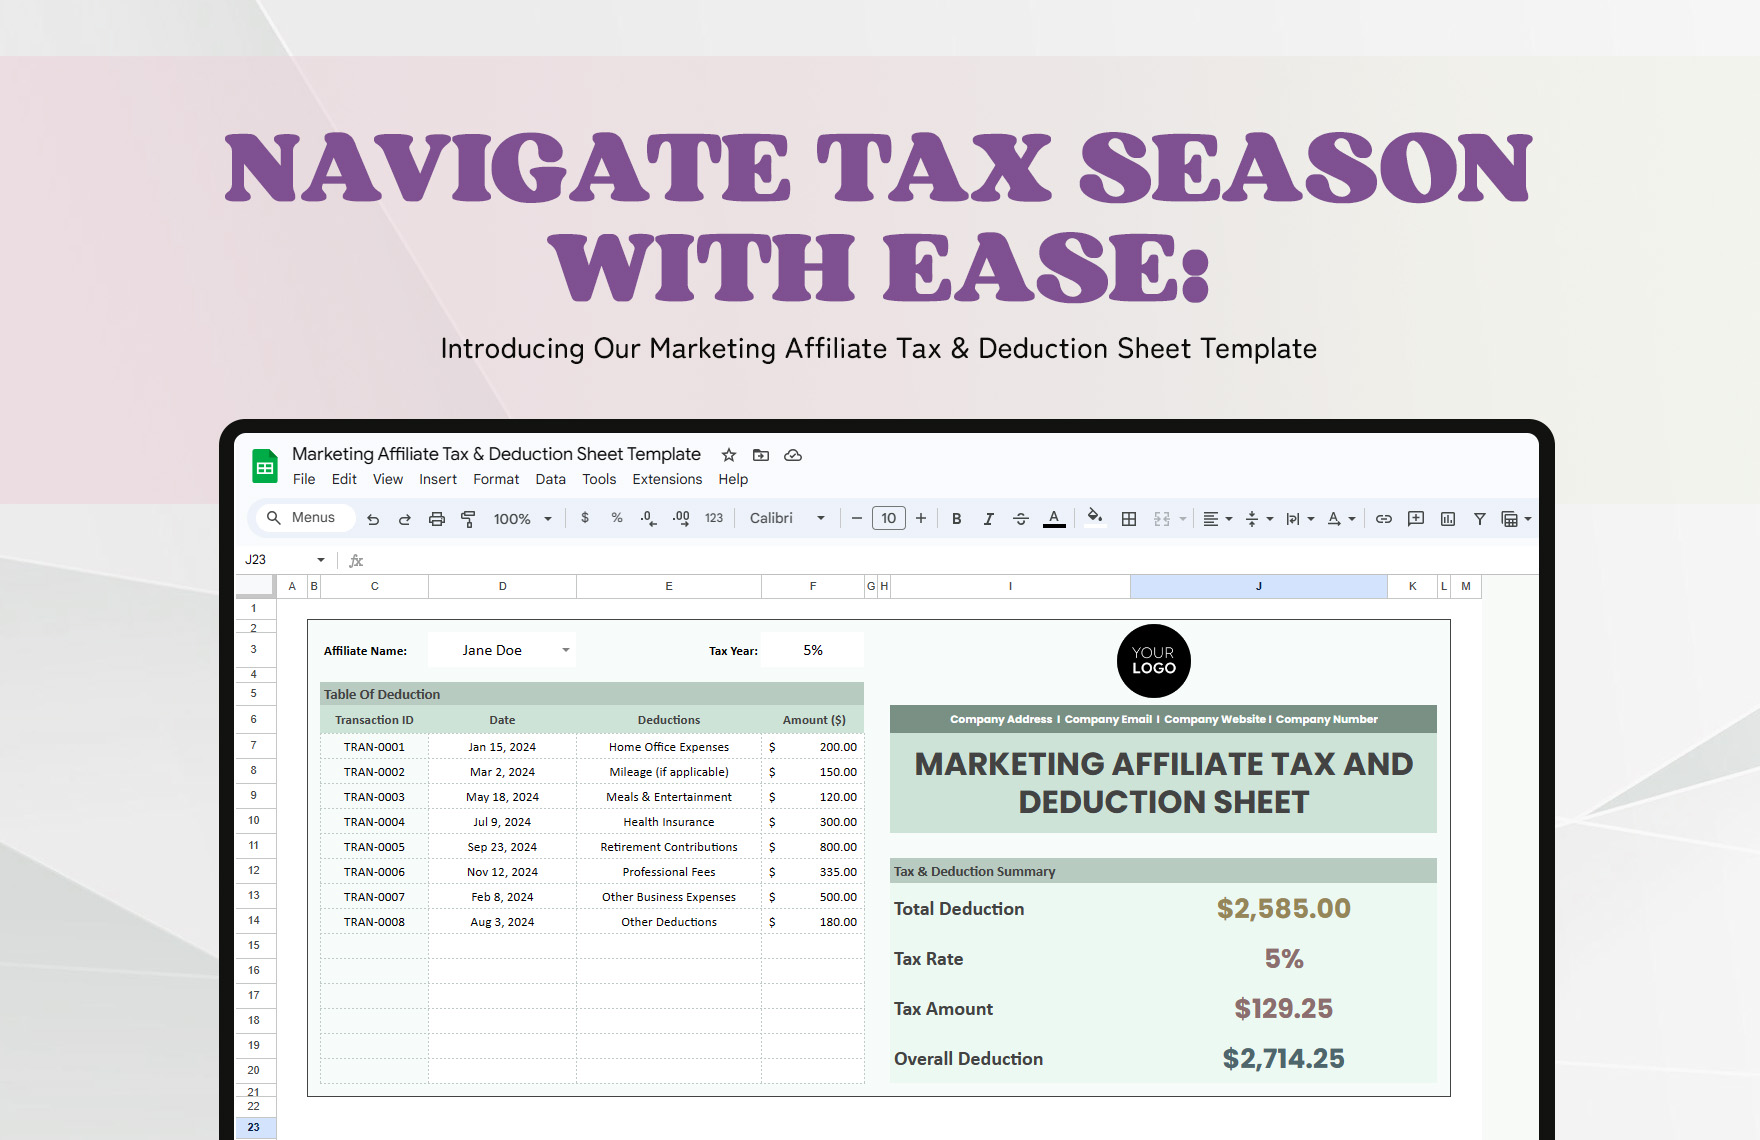 Marketing Affiliate Tax & Deduction Sheet Template